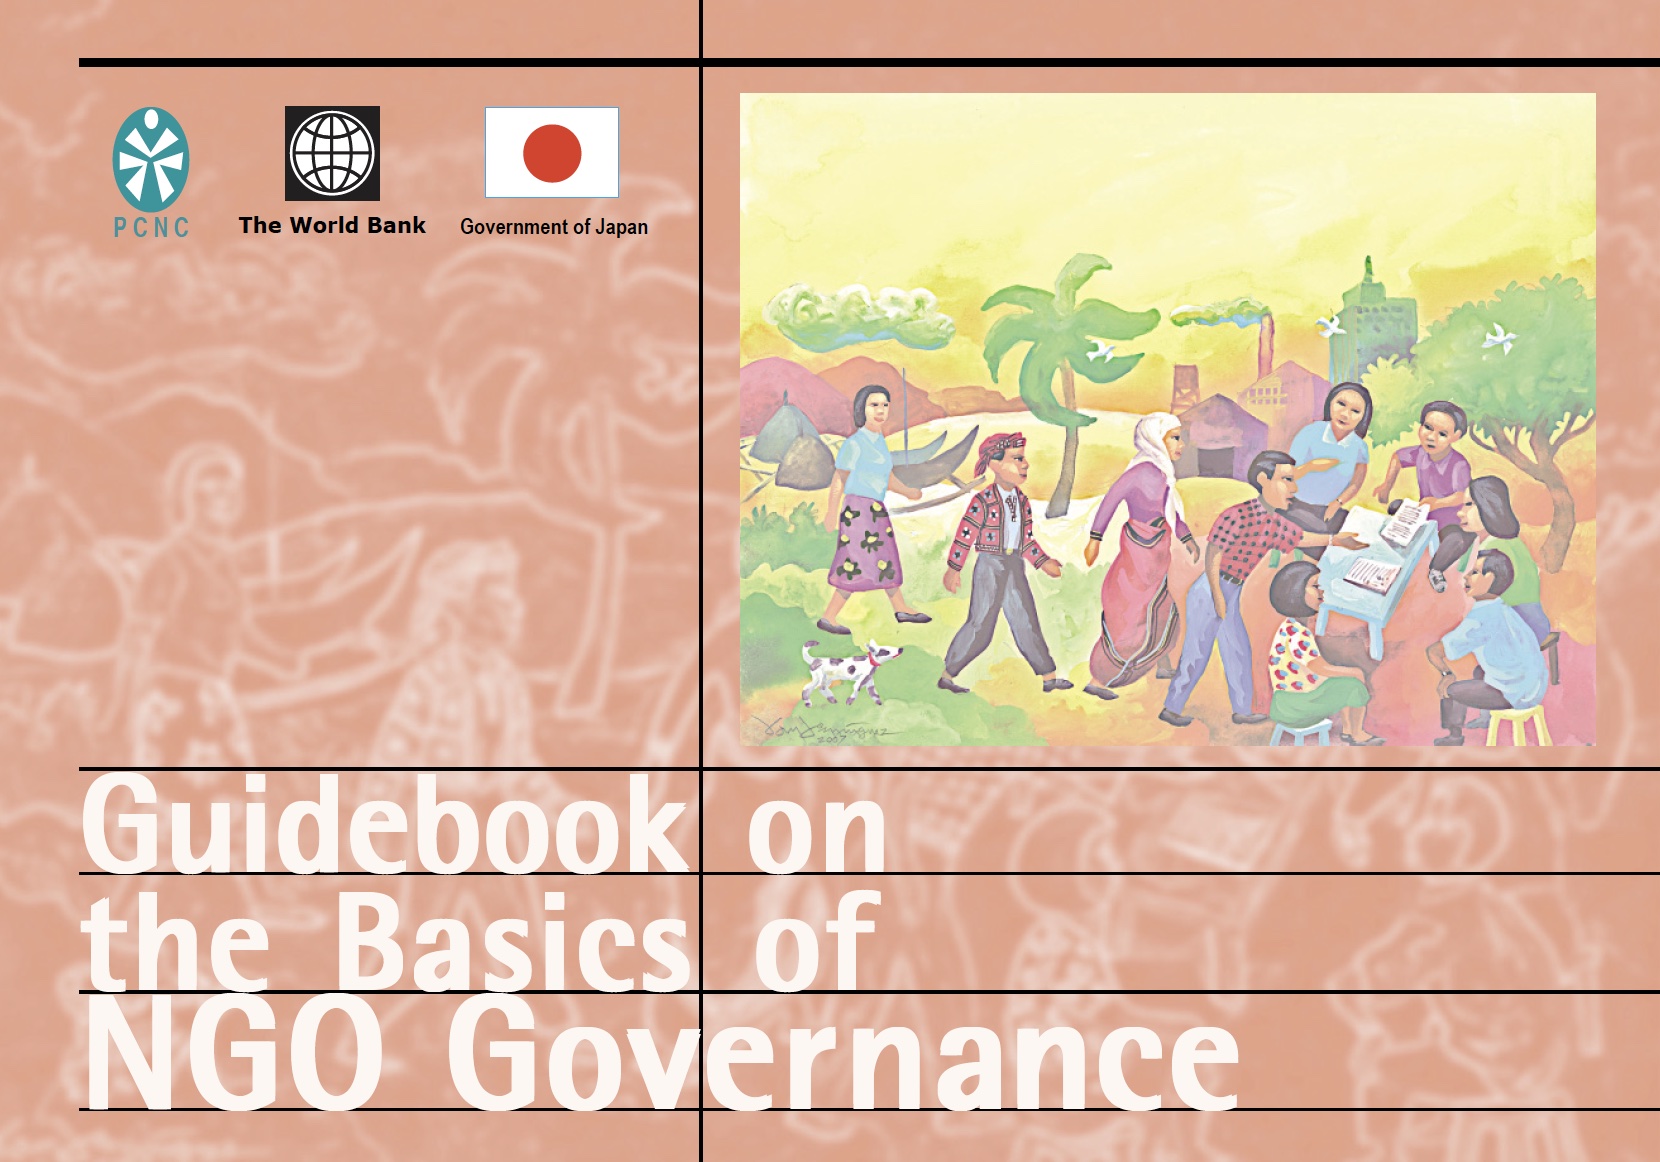 Guides on the Basics of NGO Governance